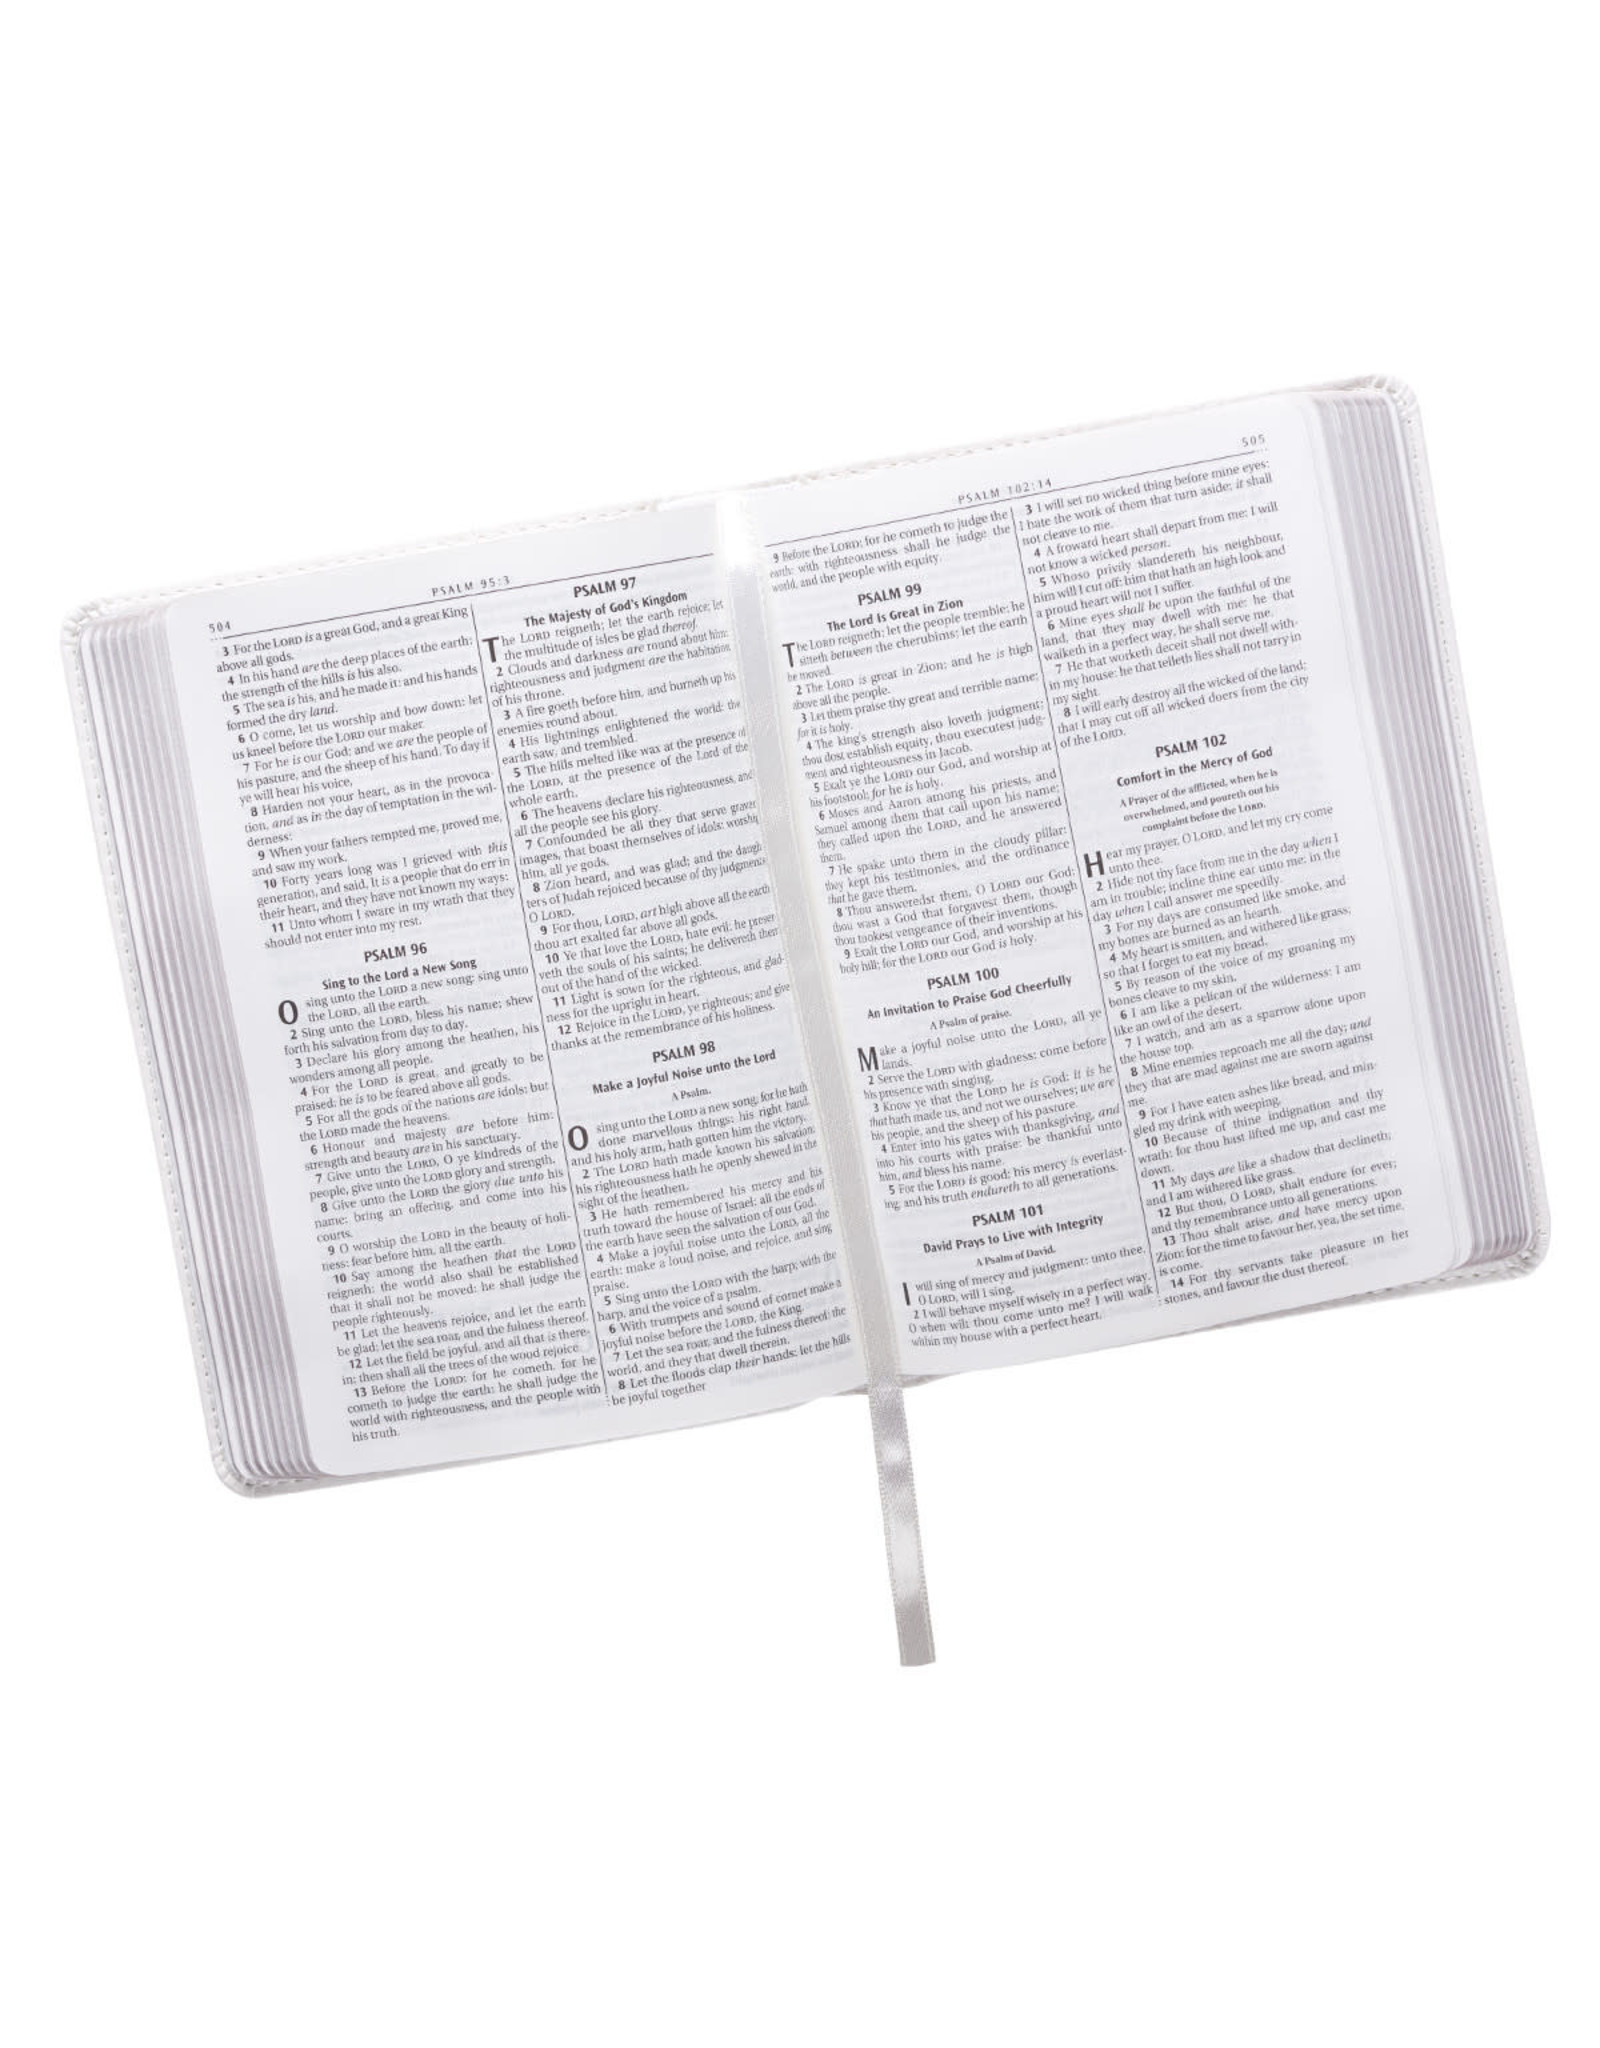 Christian Art Gifts KJV Wedding Bible (Compact)